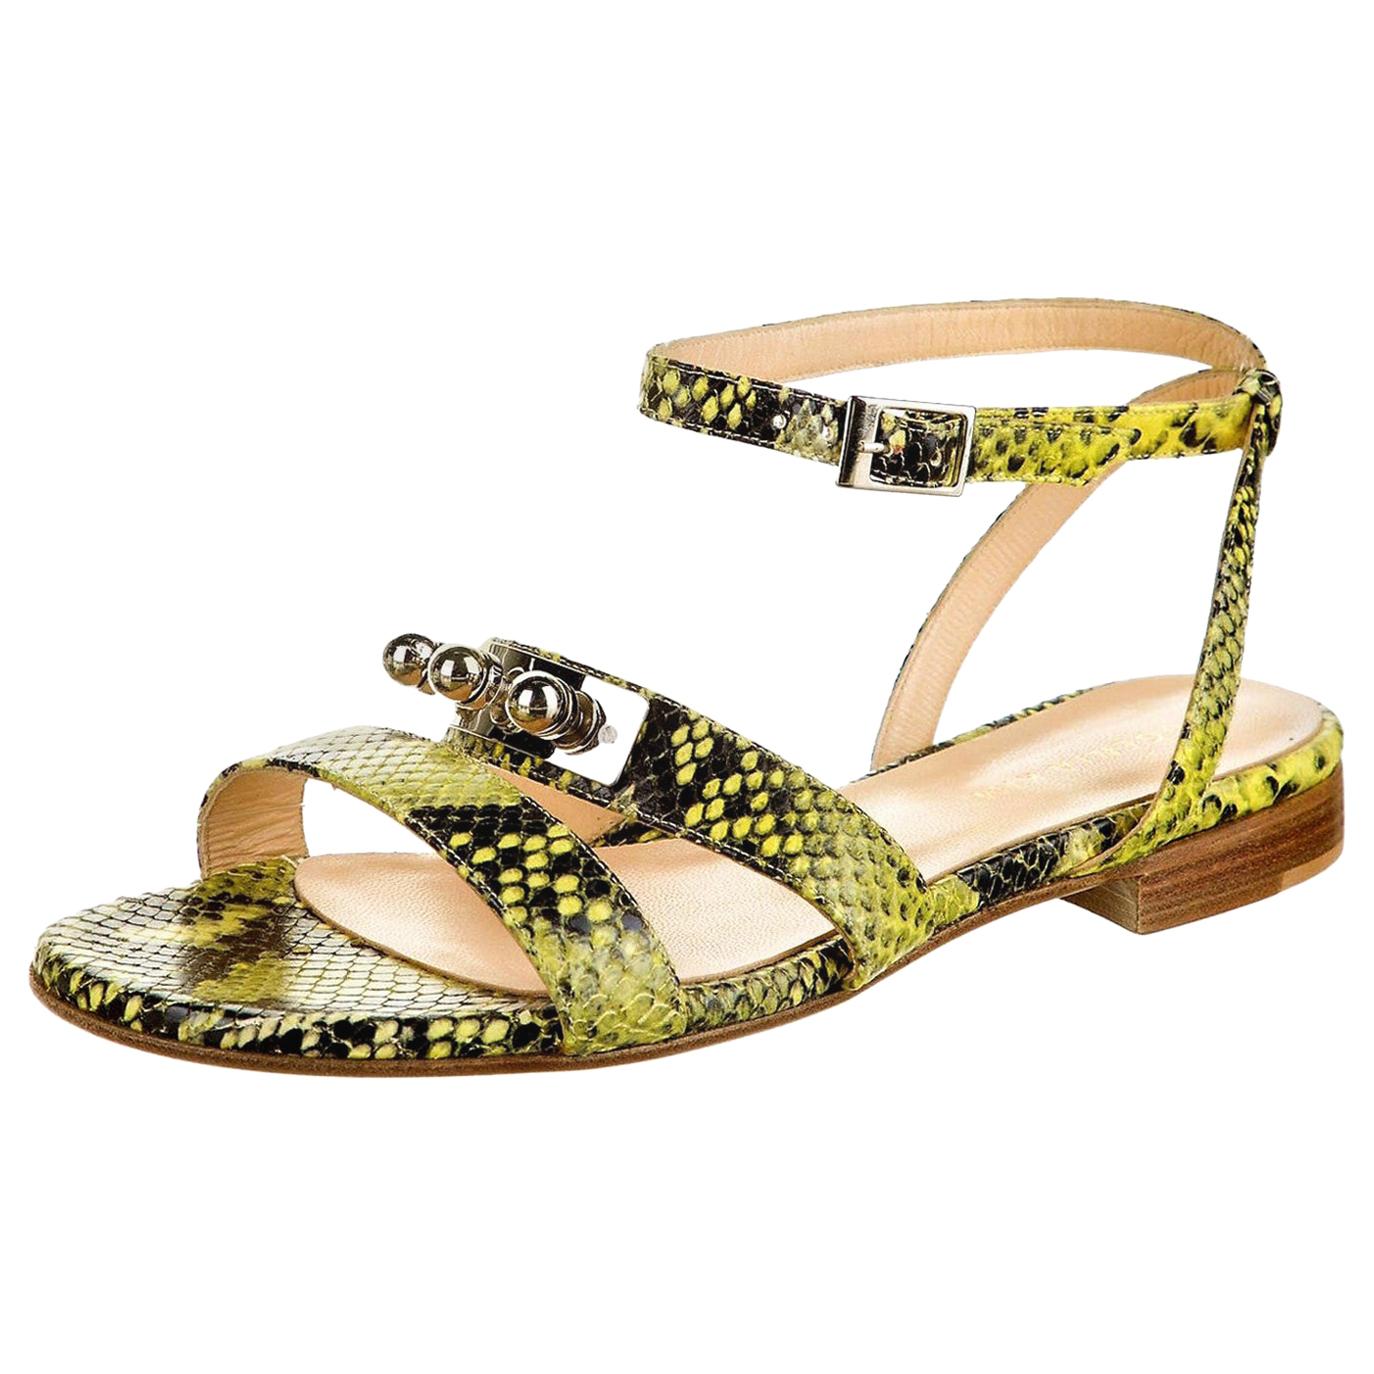 New Eugenia Kim Yellow Python Sandals Flats Shoes Sz 39  U.S. 8.5